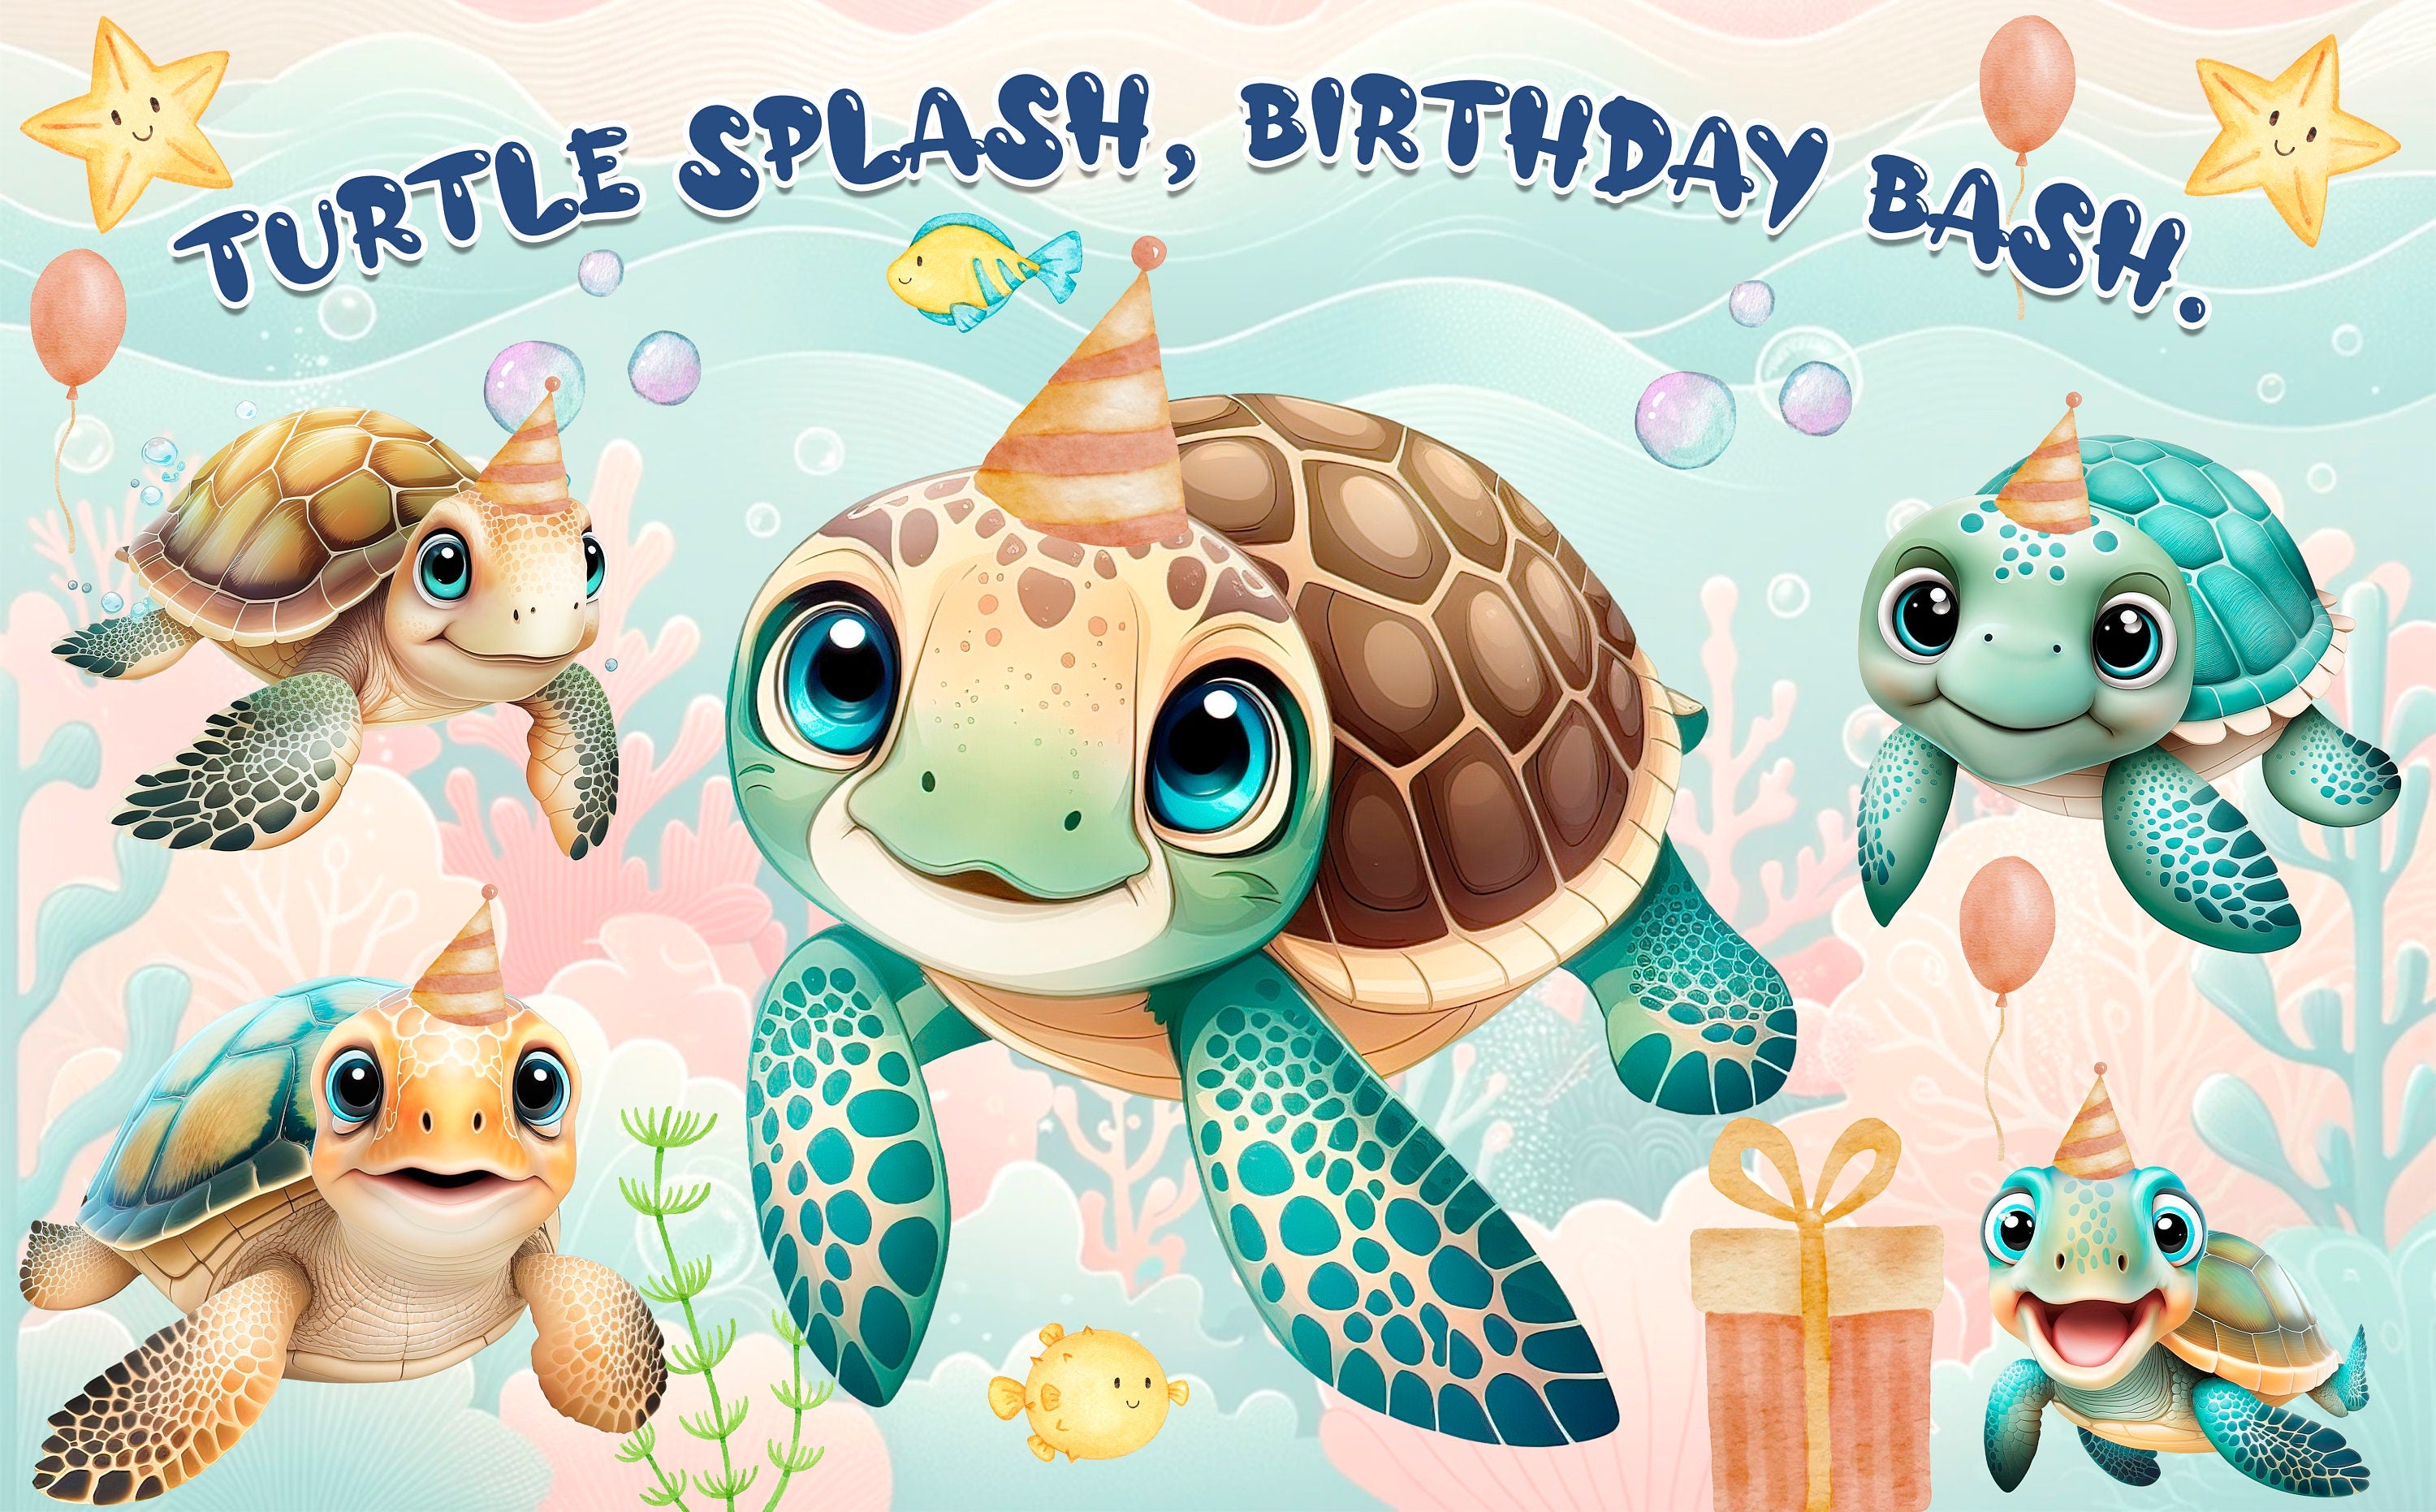 "Turtle Splash, Birthday Bash!" Backdrop 5x3 FT - Dive into the Fun!